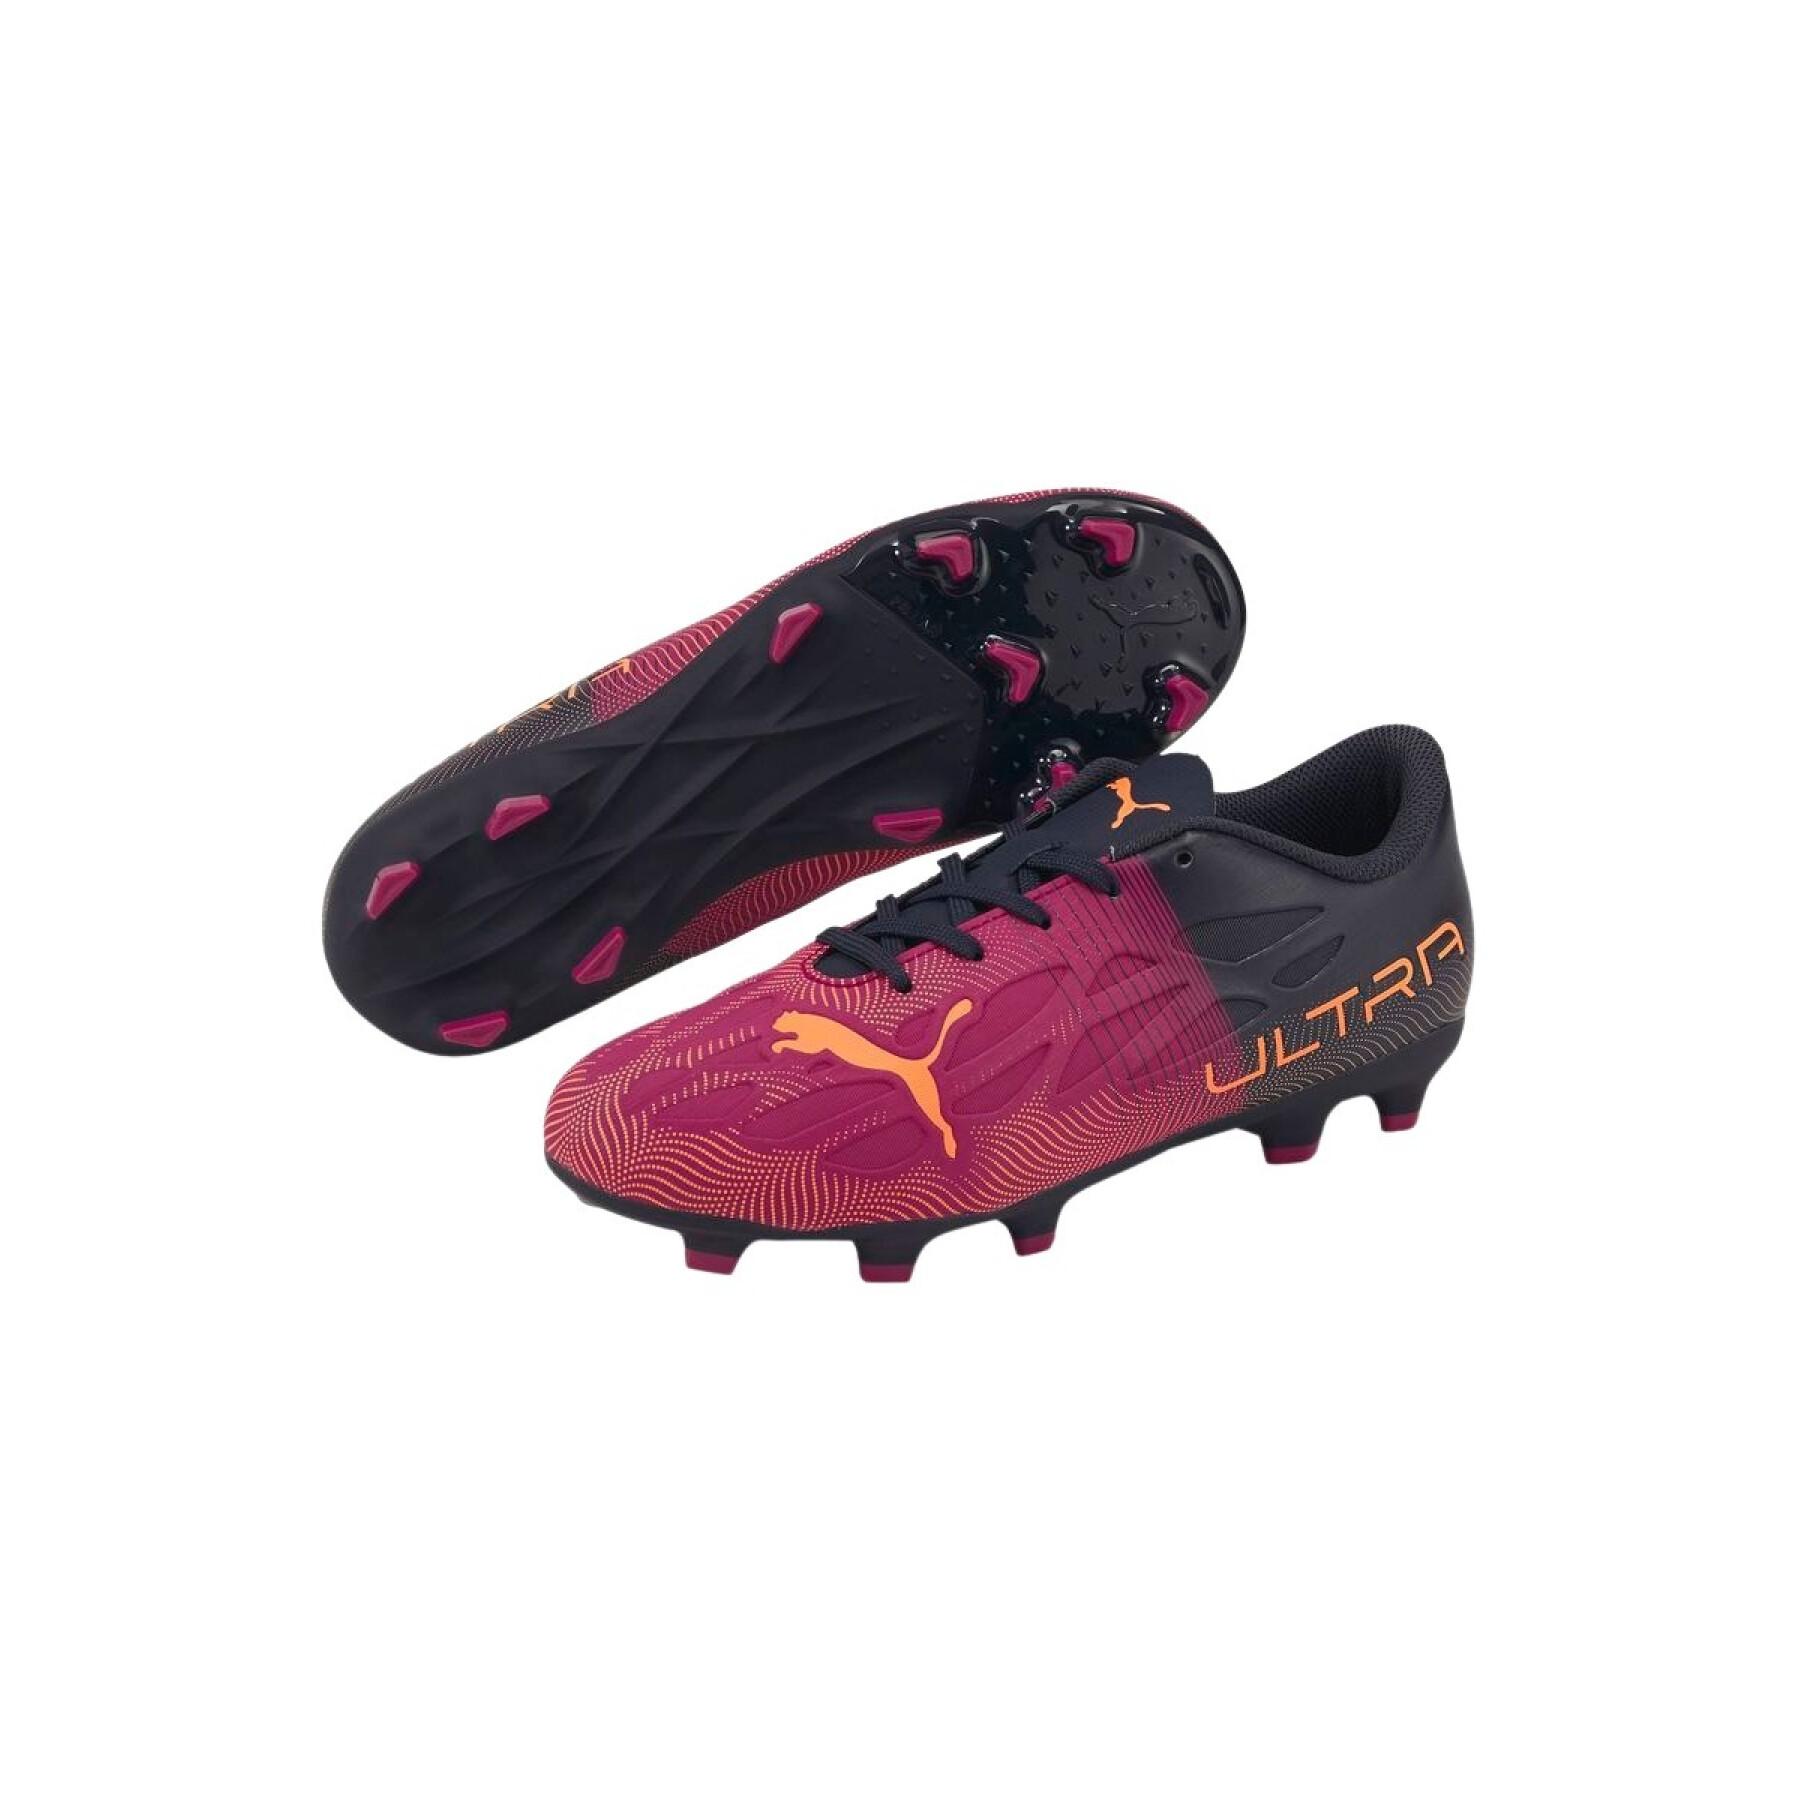 Children's soccer shoes Puma Ultra 4.4 FG/AG